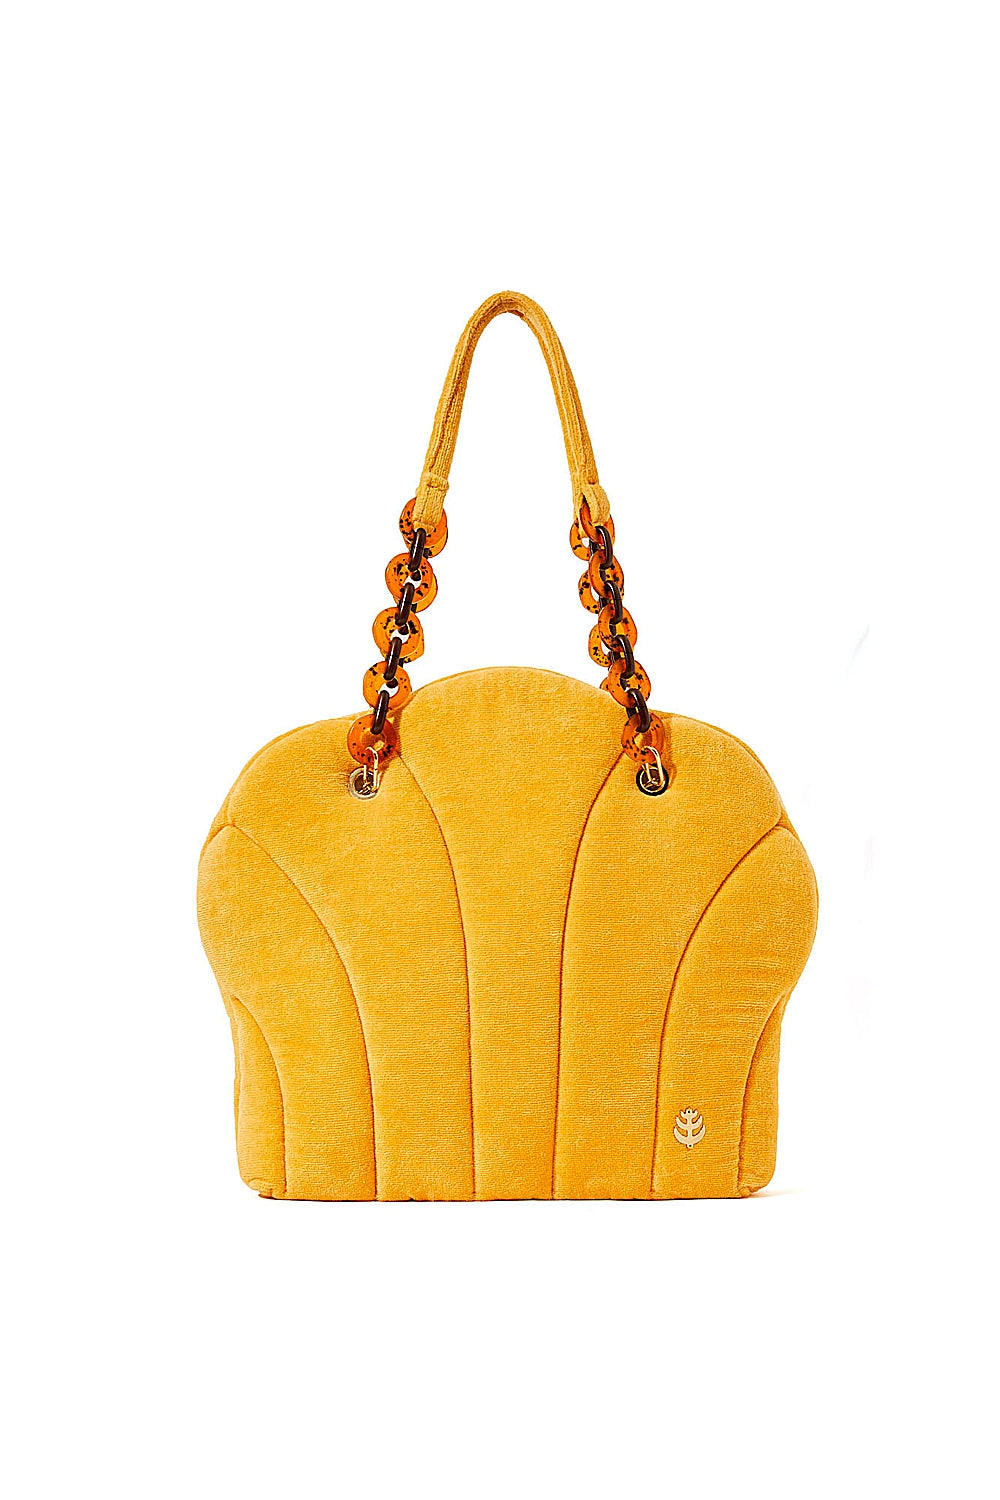 Rise of Aphrodite Handbag - Golden Light